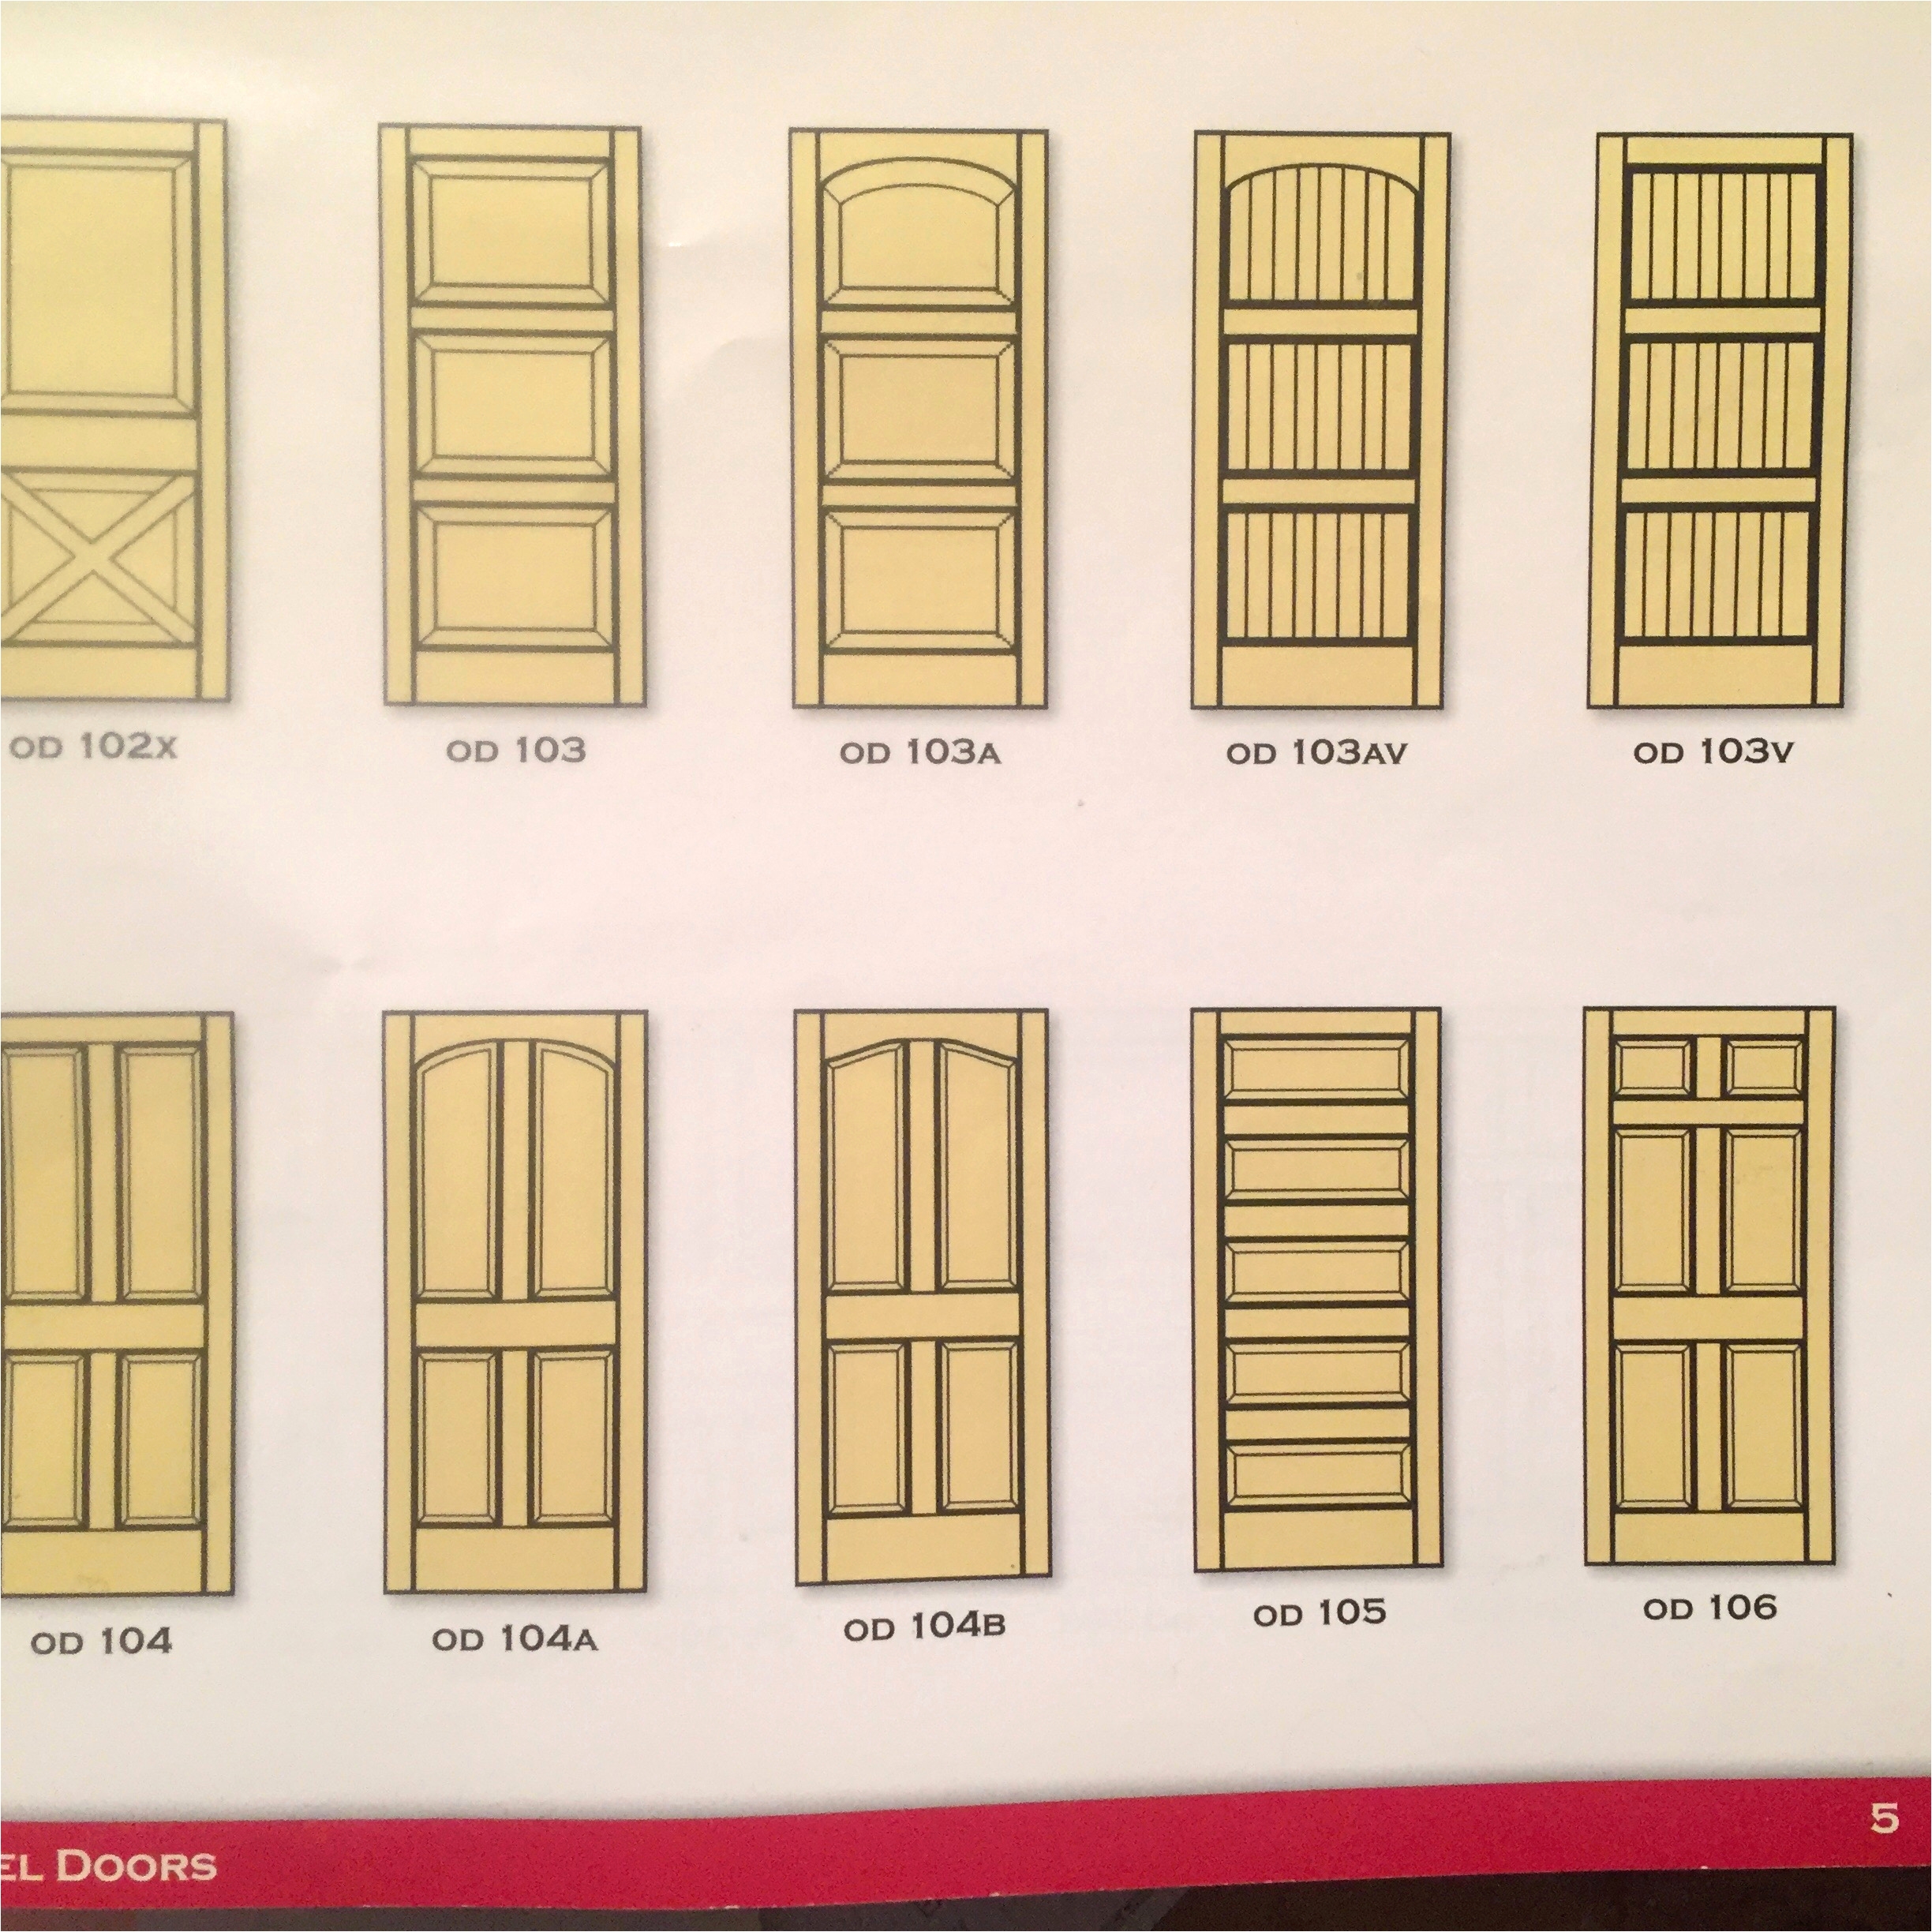 amish custom doors mills doors to customers design specifications dimensions slab doors or prehung